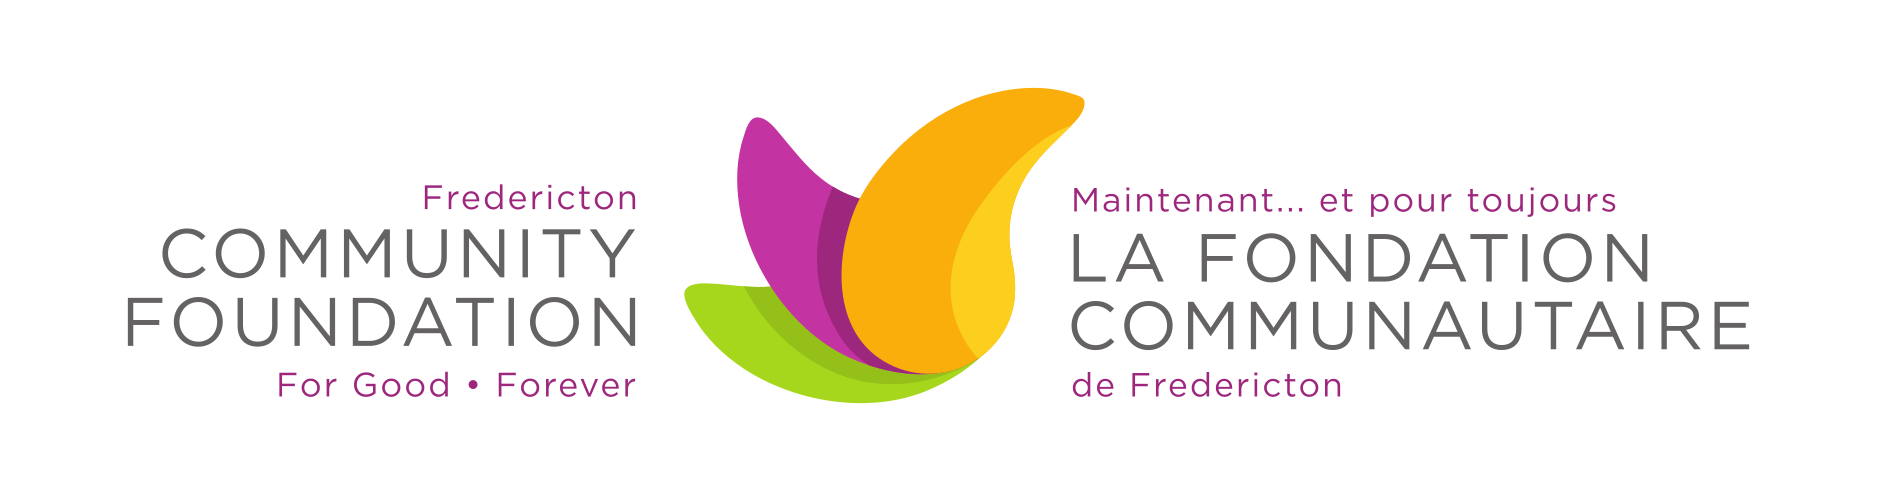 Fredericton Community Foundation logo